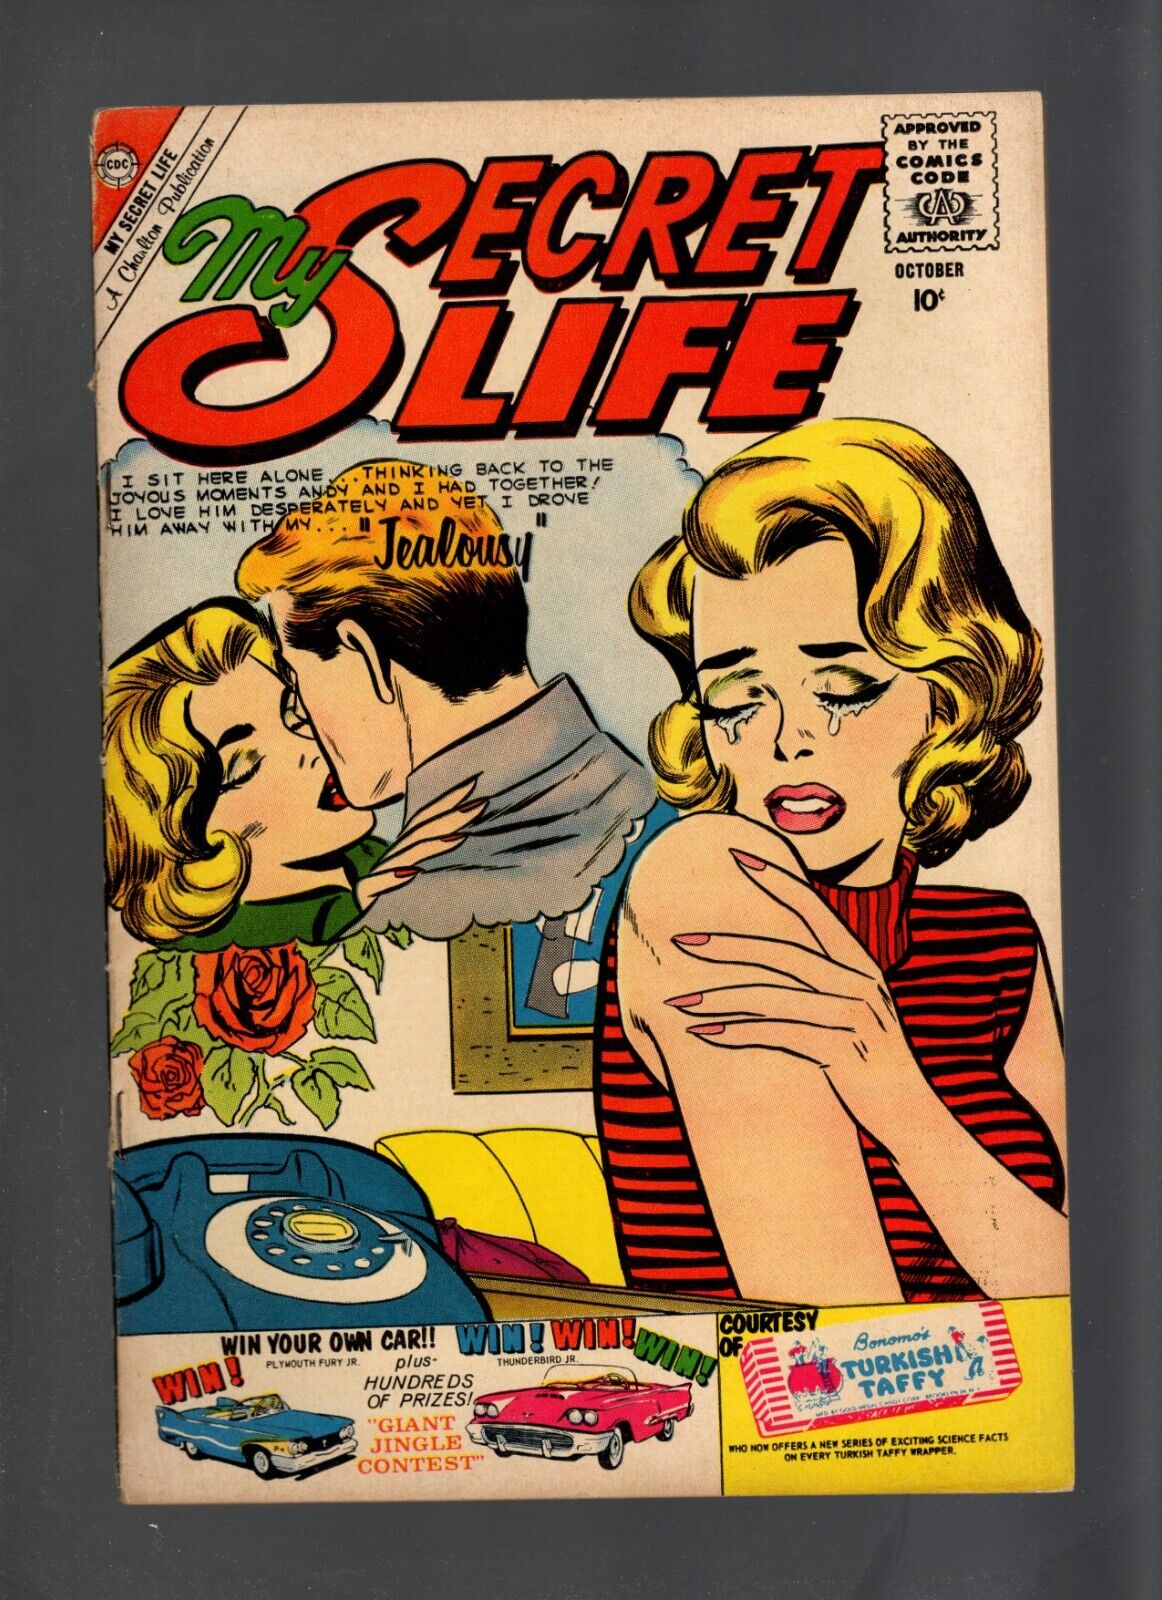 MY SECRET LIFE #36 CLASSIC VINCE COLLETTA GOOD GIRL ROMANCE COVER, 1960